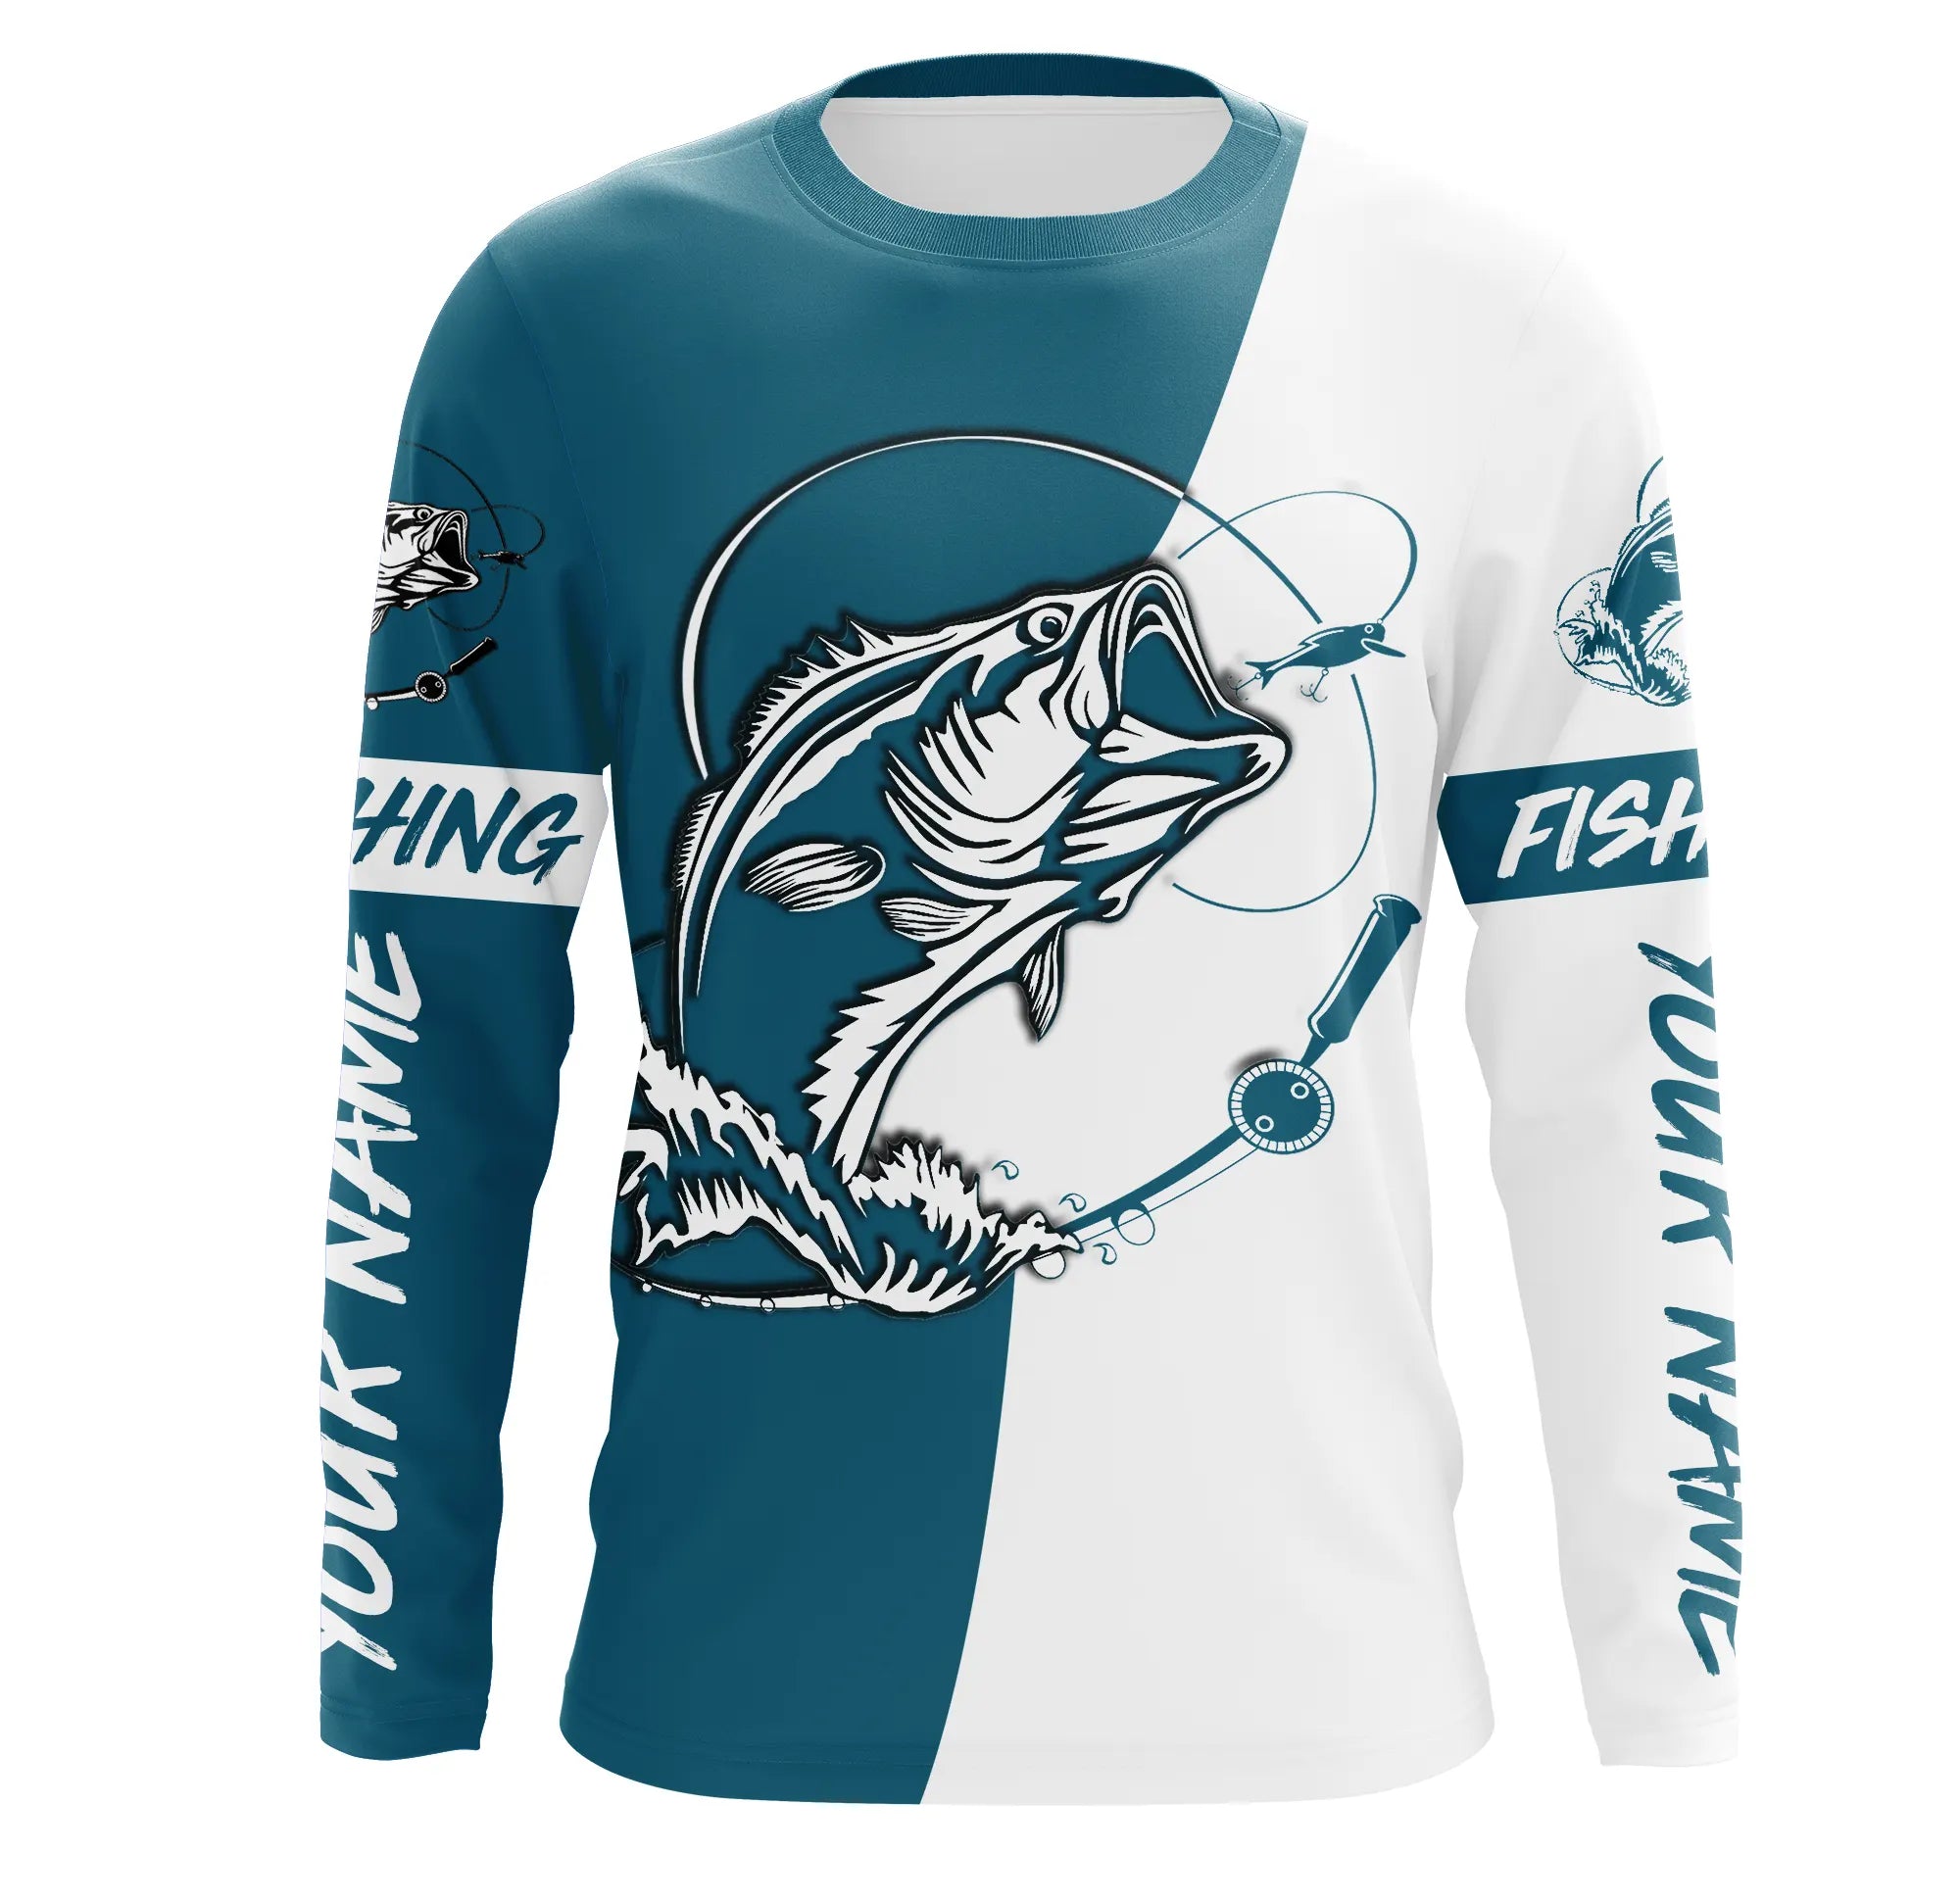 Personalized Bass Fishing Jerseys, Custom Name Bass Long Sleeve Tournament Fishing Shirts IPHW5879 Long Sleeves UPF / Orange